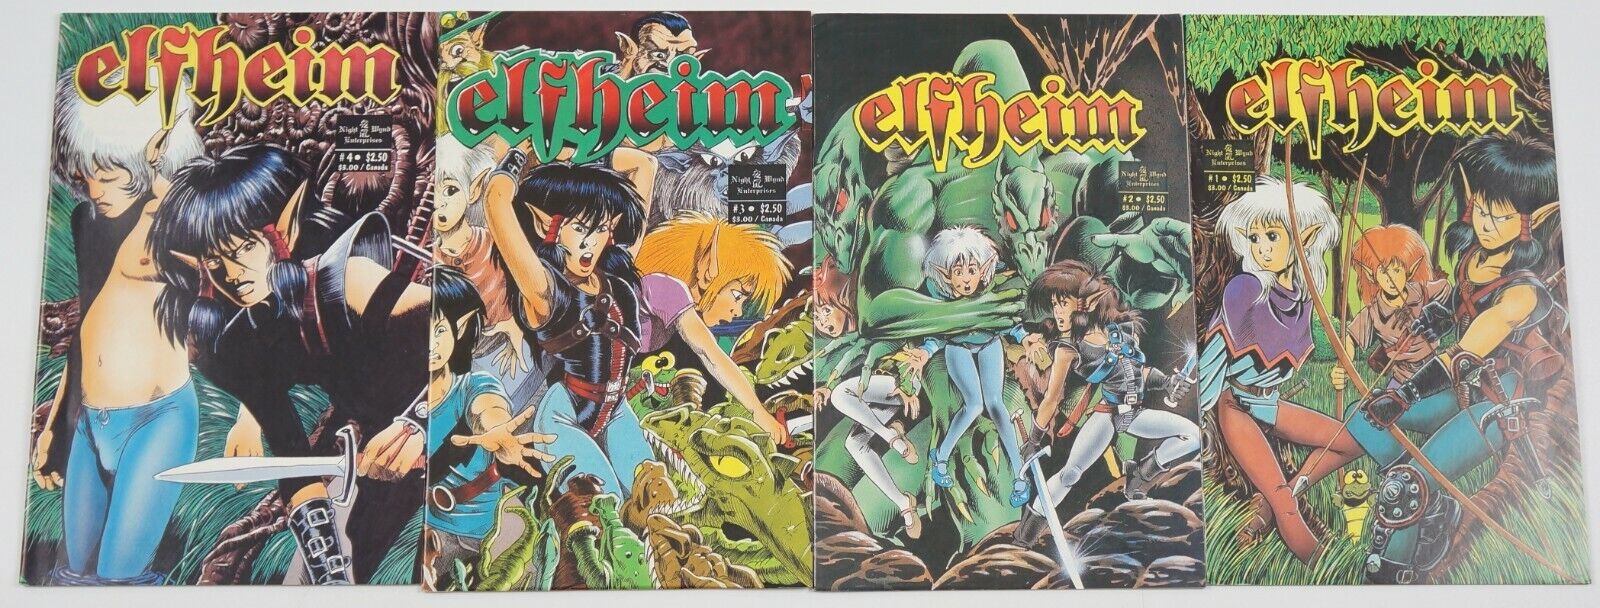 Elfheim #1-4 VF/NM complete series - barry blair - night wynd comics set 2 3 lot